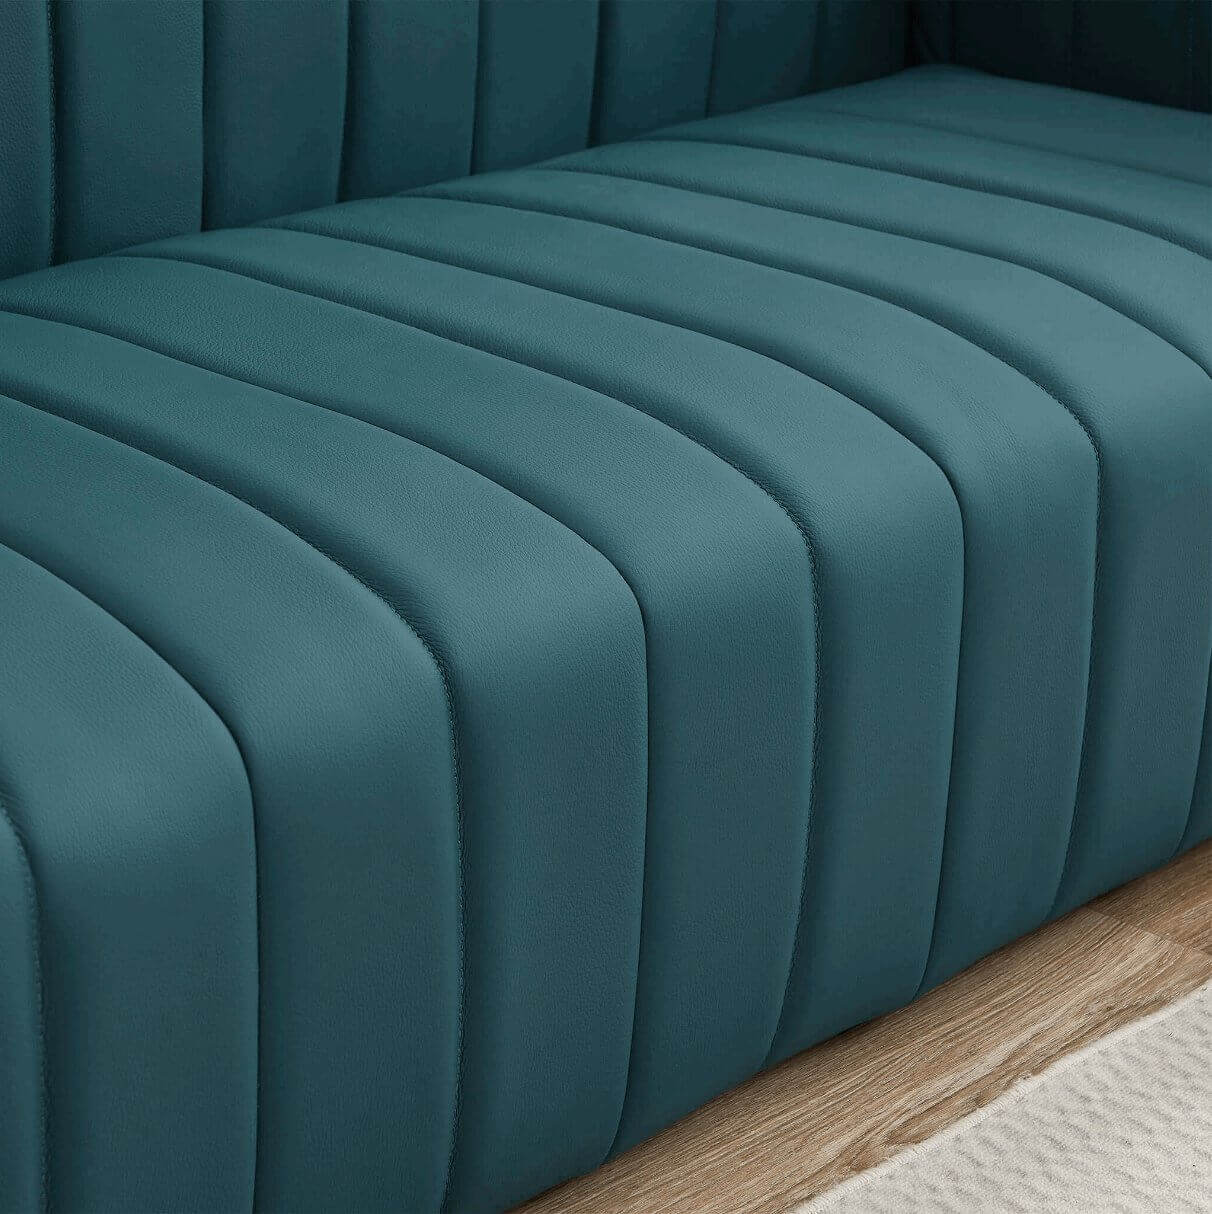 MCM Luxury Genuine Leather Channel Tufted Sofa 89” - Revel Sofa 